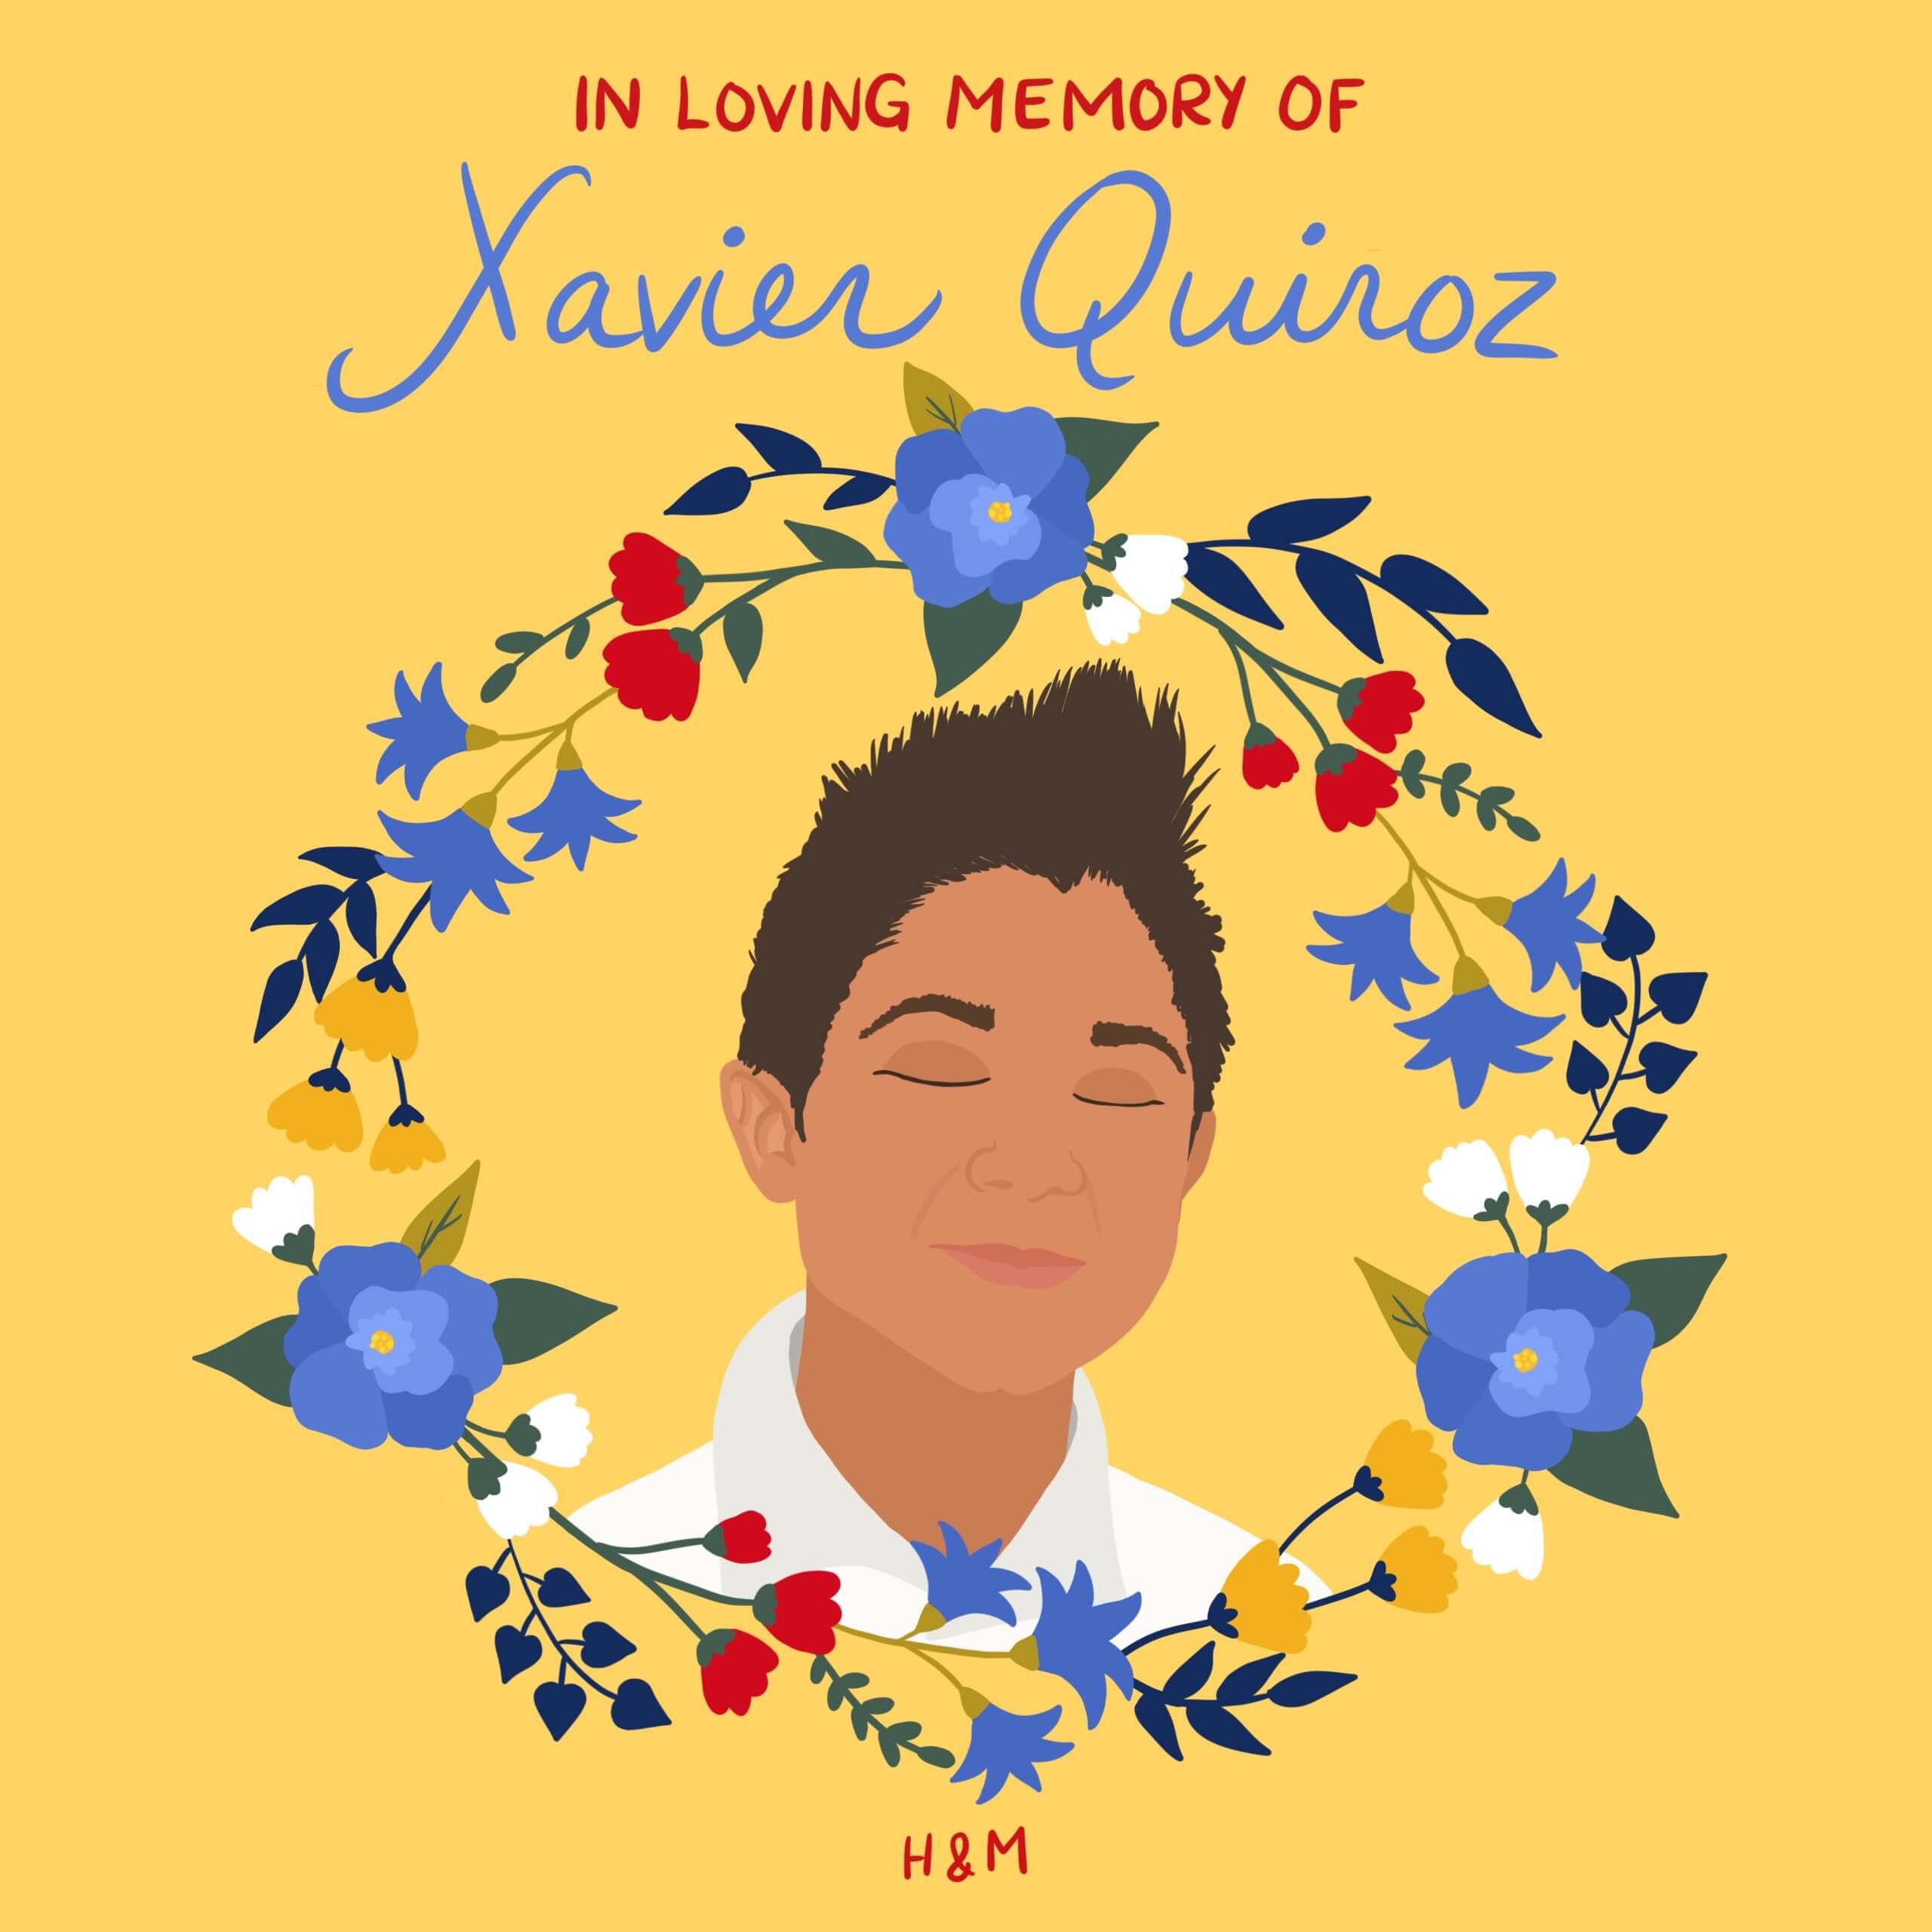 In loving memory of Xavier Quiroz